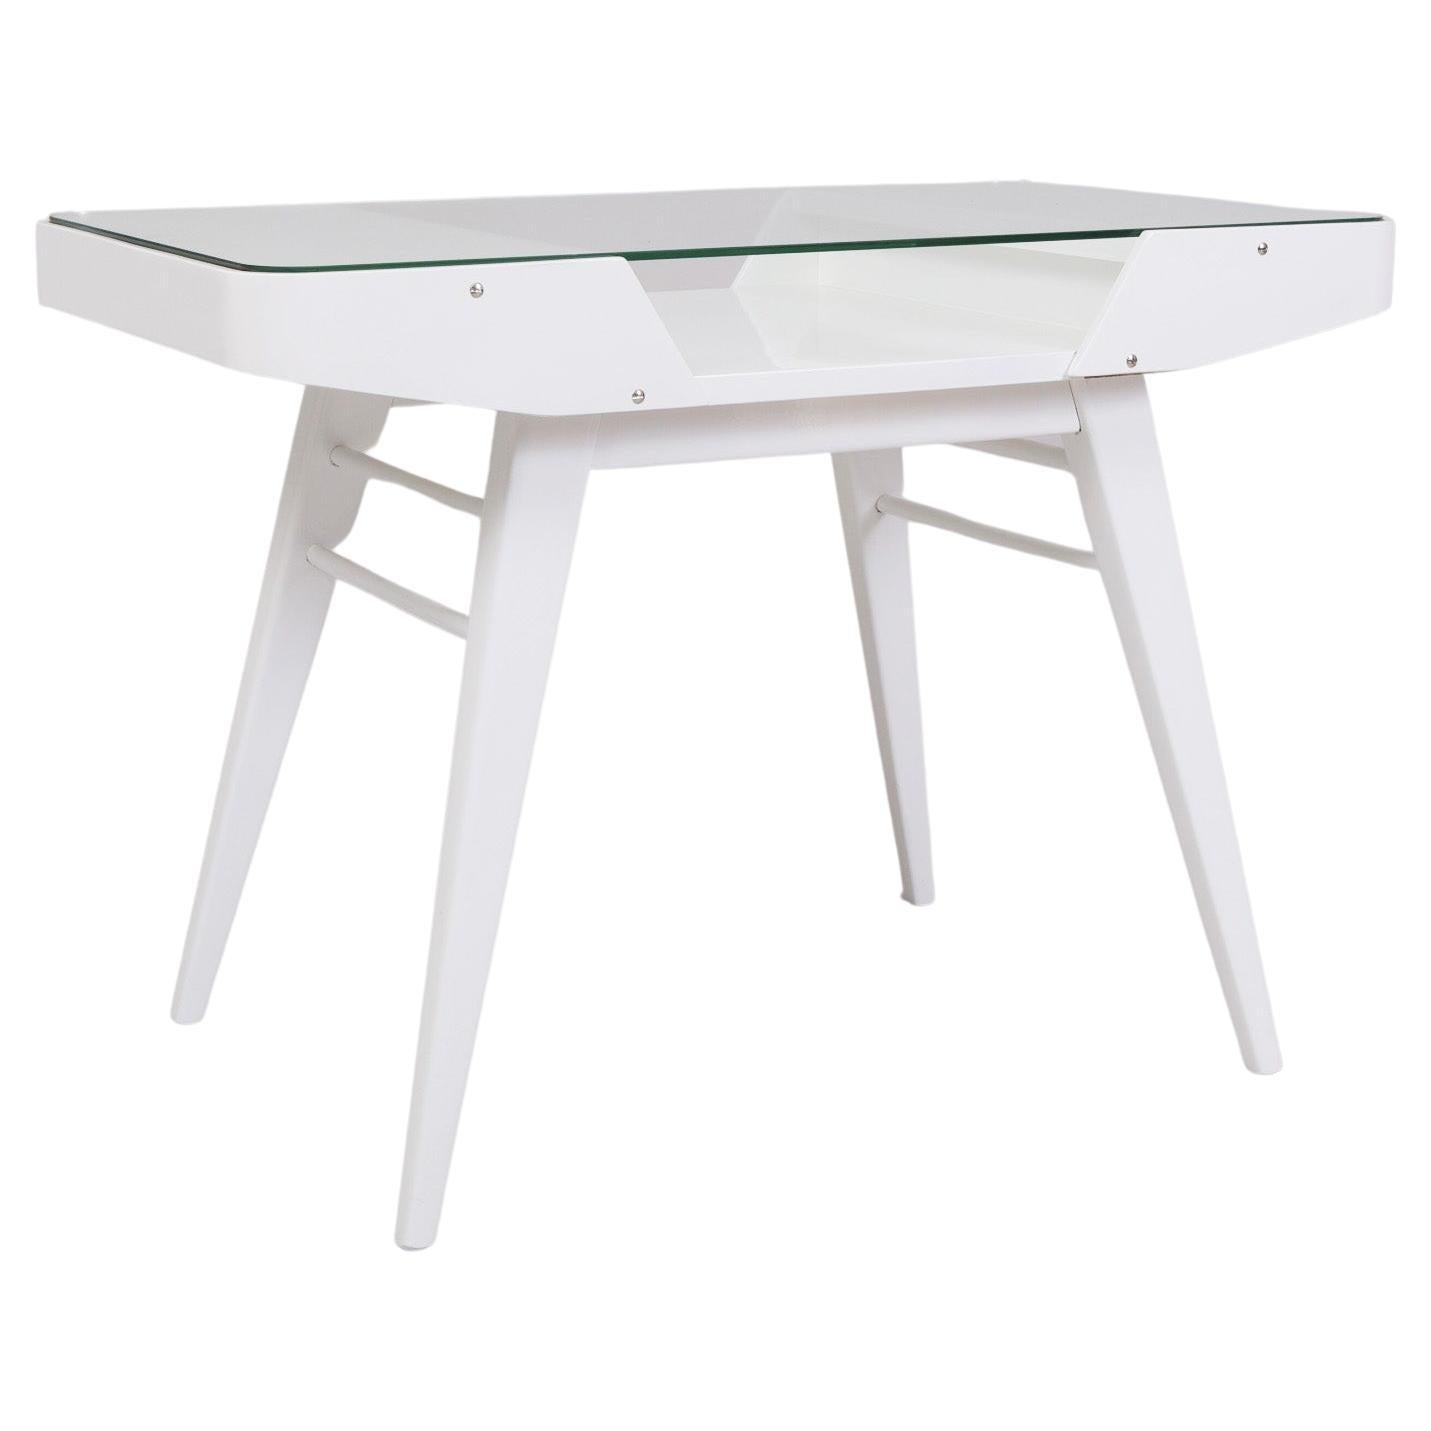 White Mid Century Table Made in´50s Czechia, Designed by František Jirák